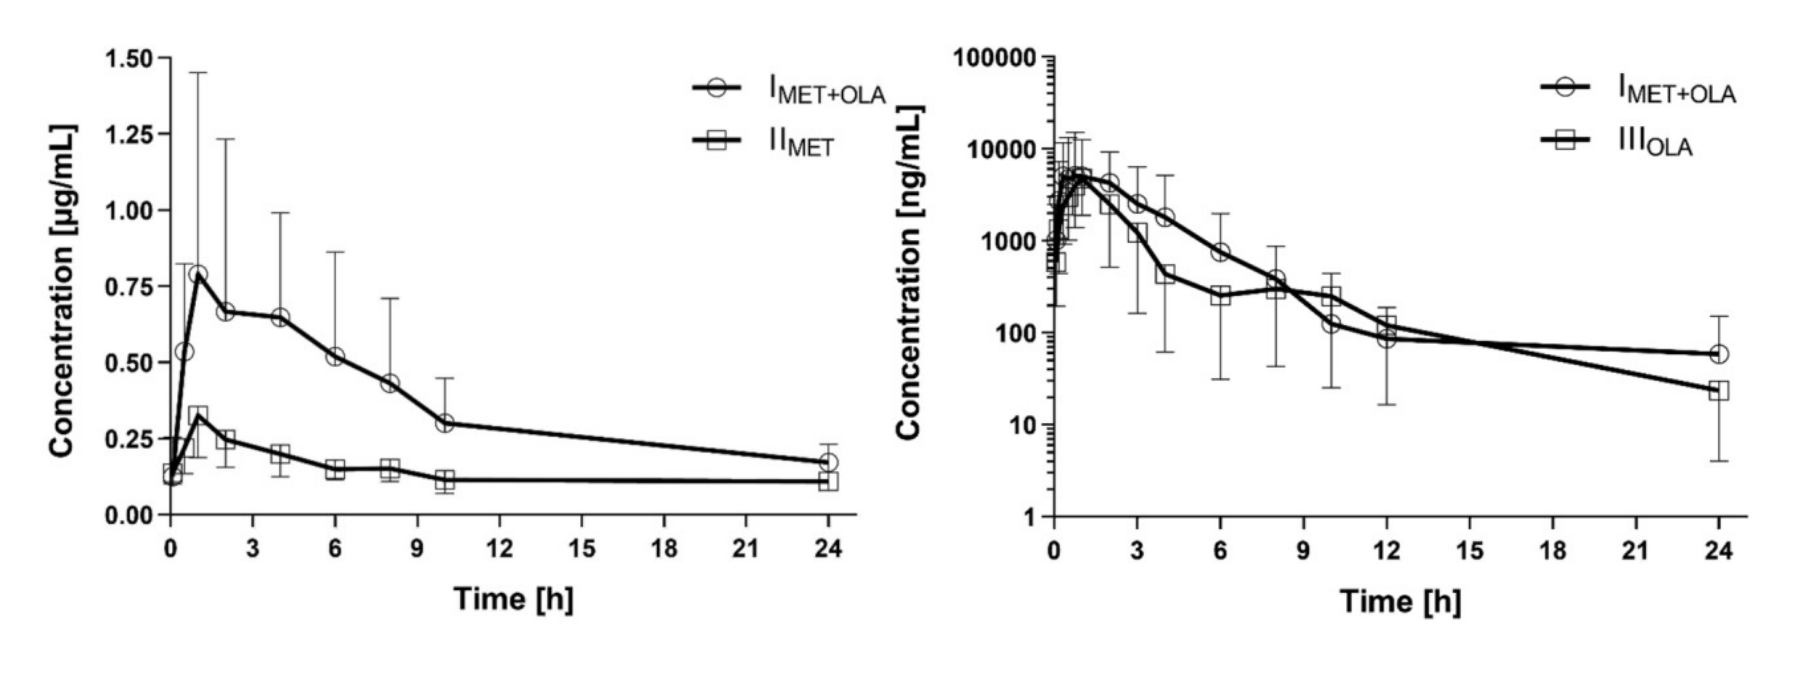 Fig. 1 Left: Metformin plasma concentration-time profiles.